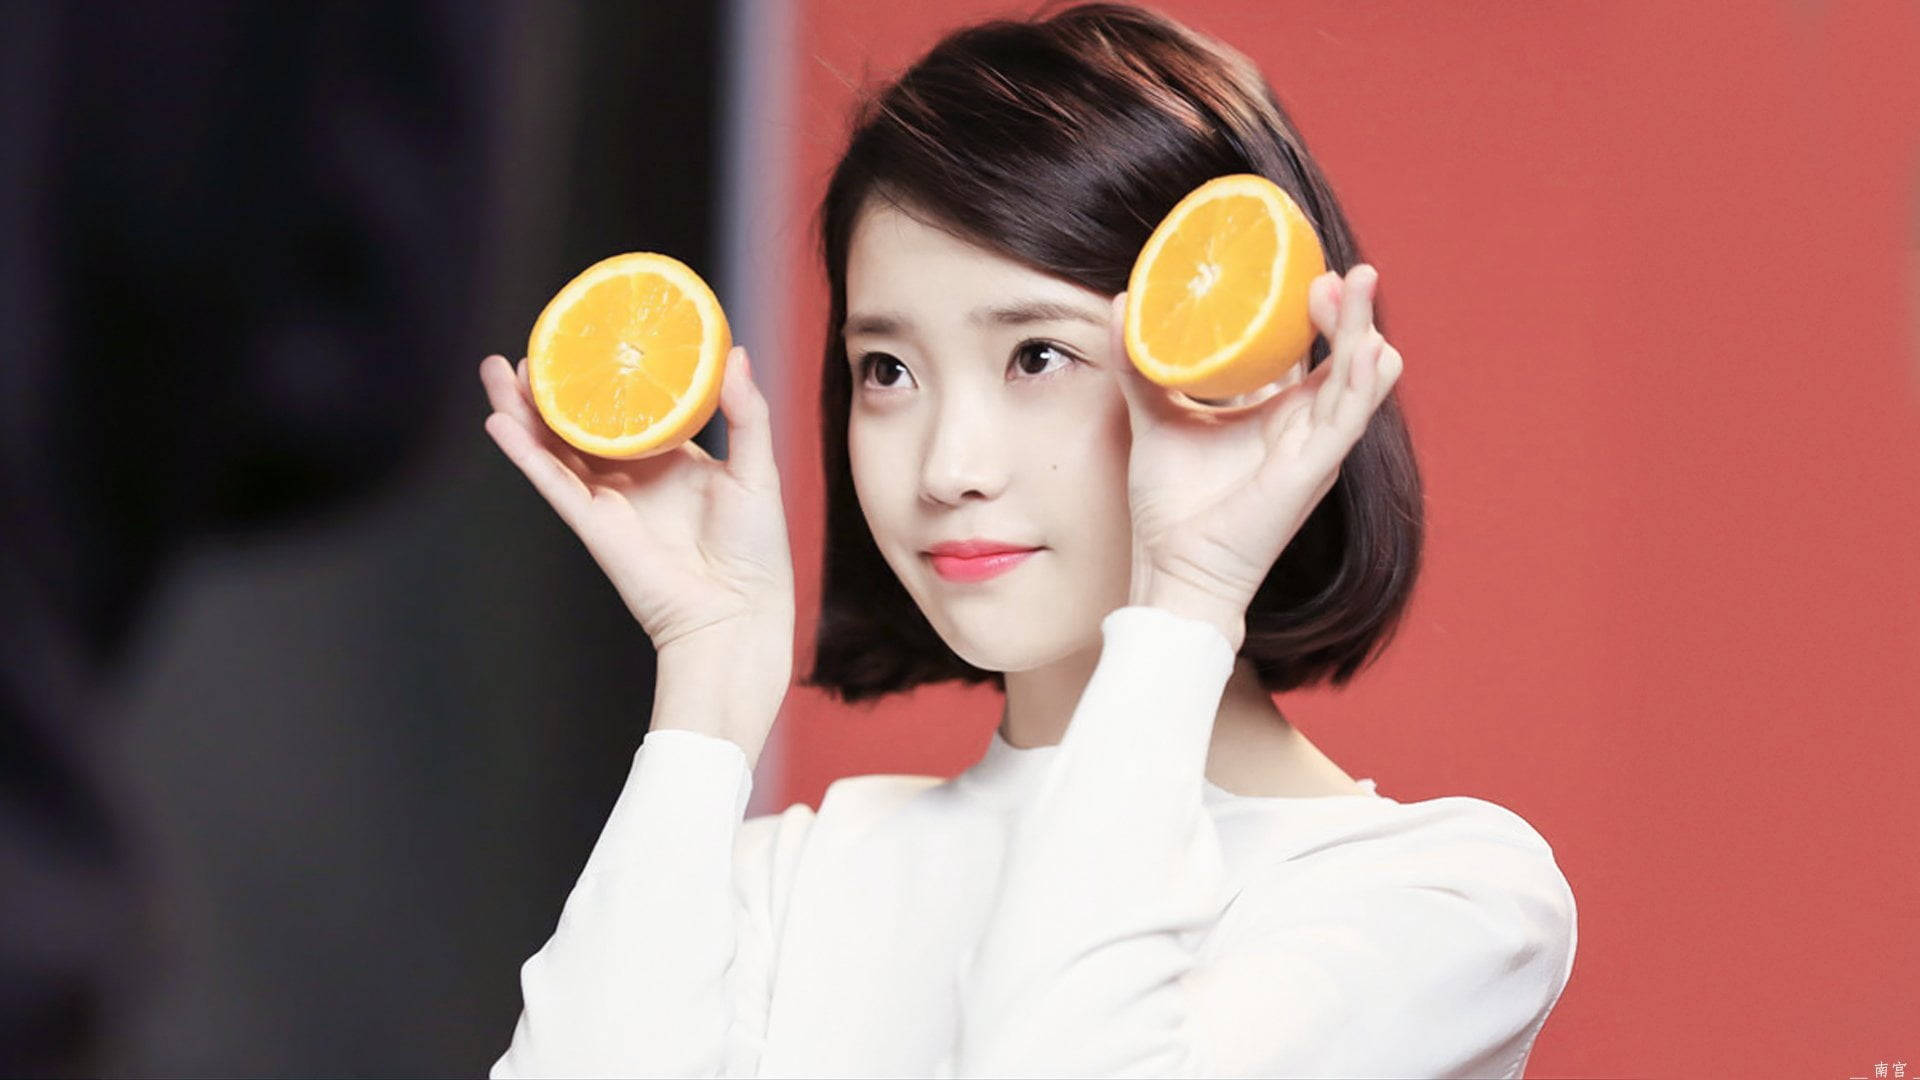 Iu Presenting An Orange Background